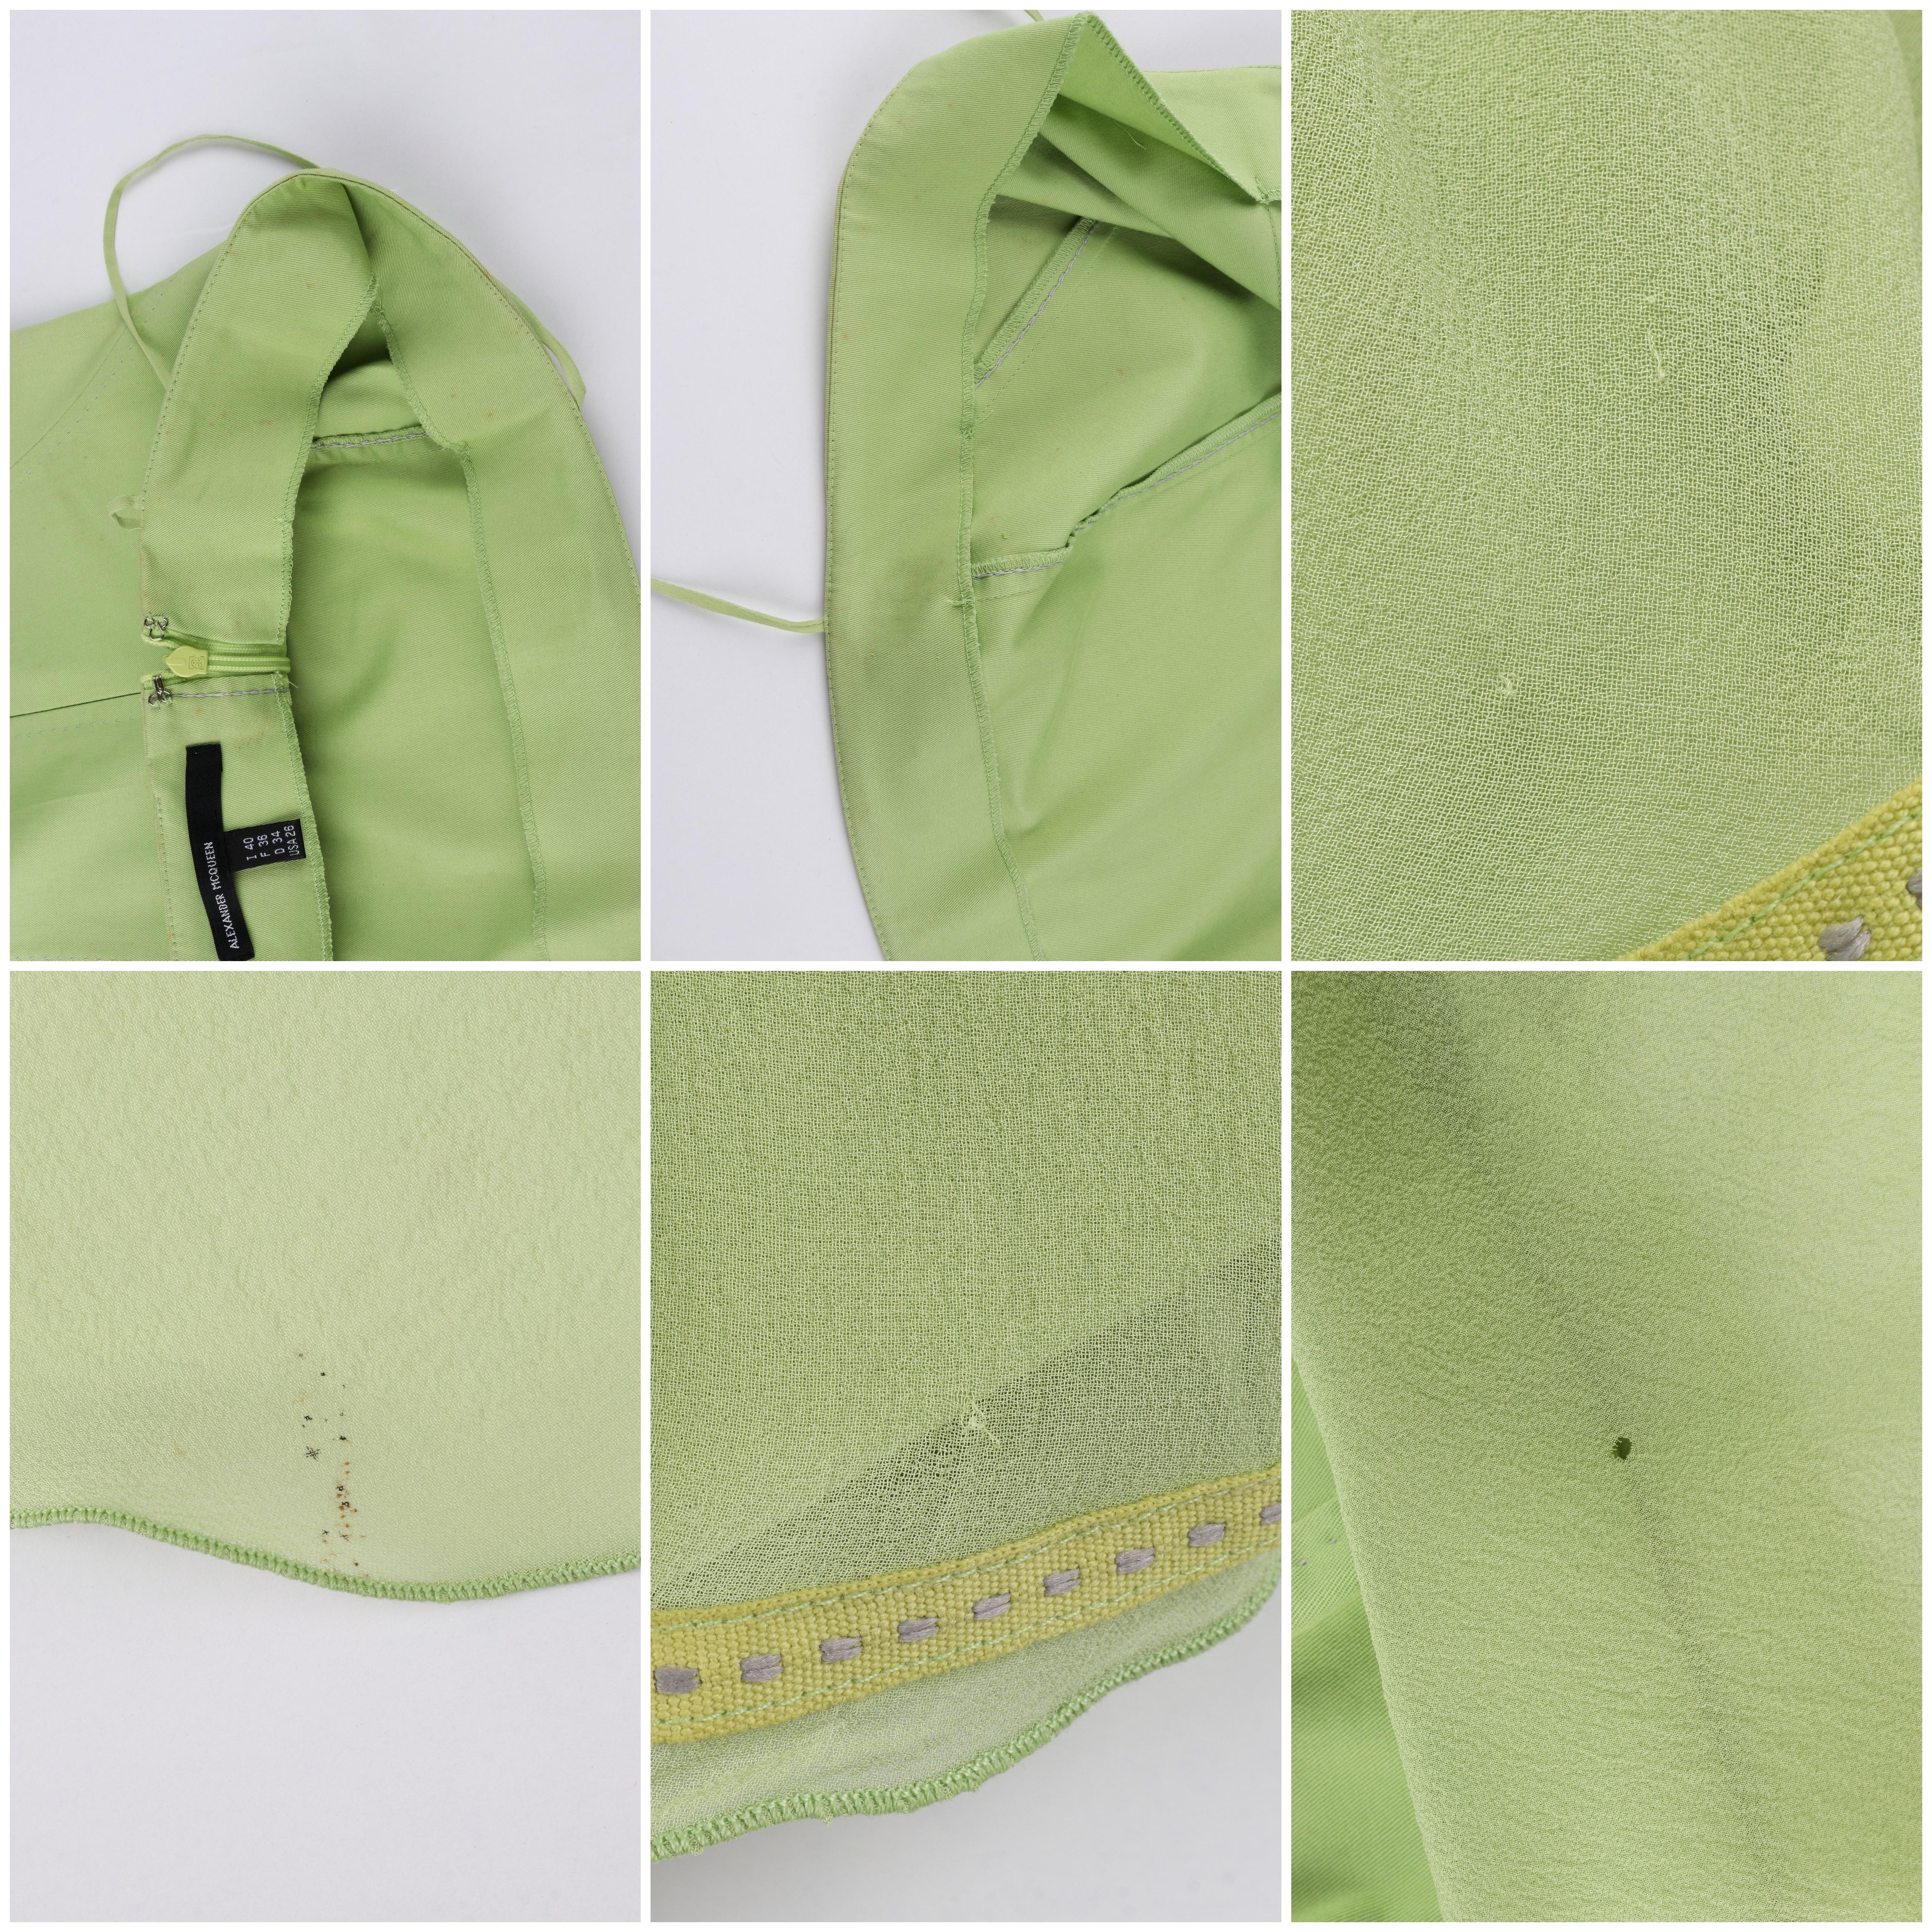 ALEXANDER McQUEEN S/S 1996 “The Hunger” Green Asymmetric Strapless Ruffle Dress For Sale 3